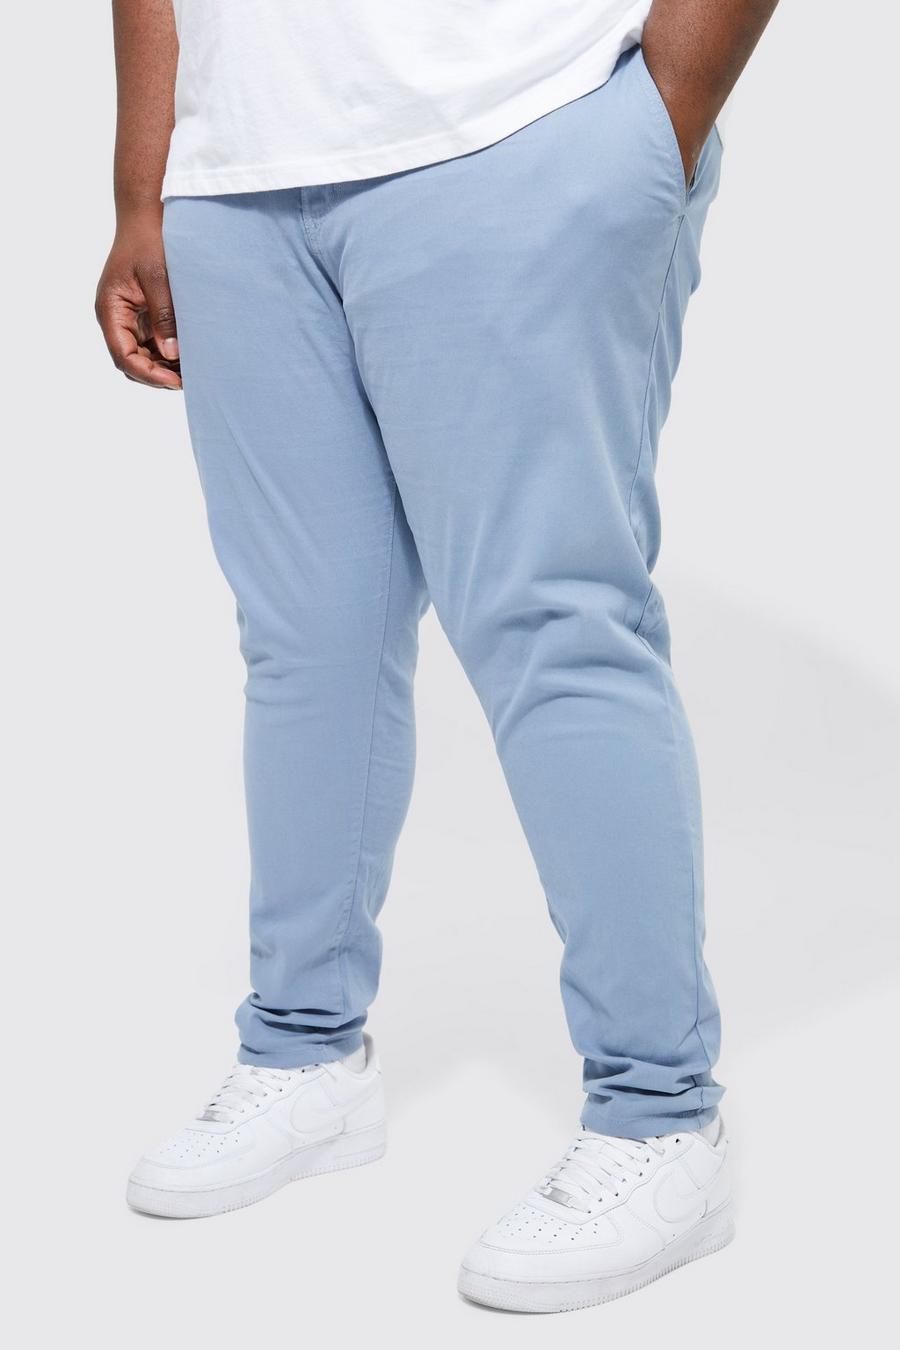 Pantalón Plus chino pitillo elástico con cintura fija, Denim-blue azul